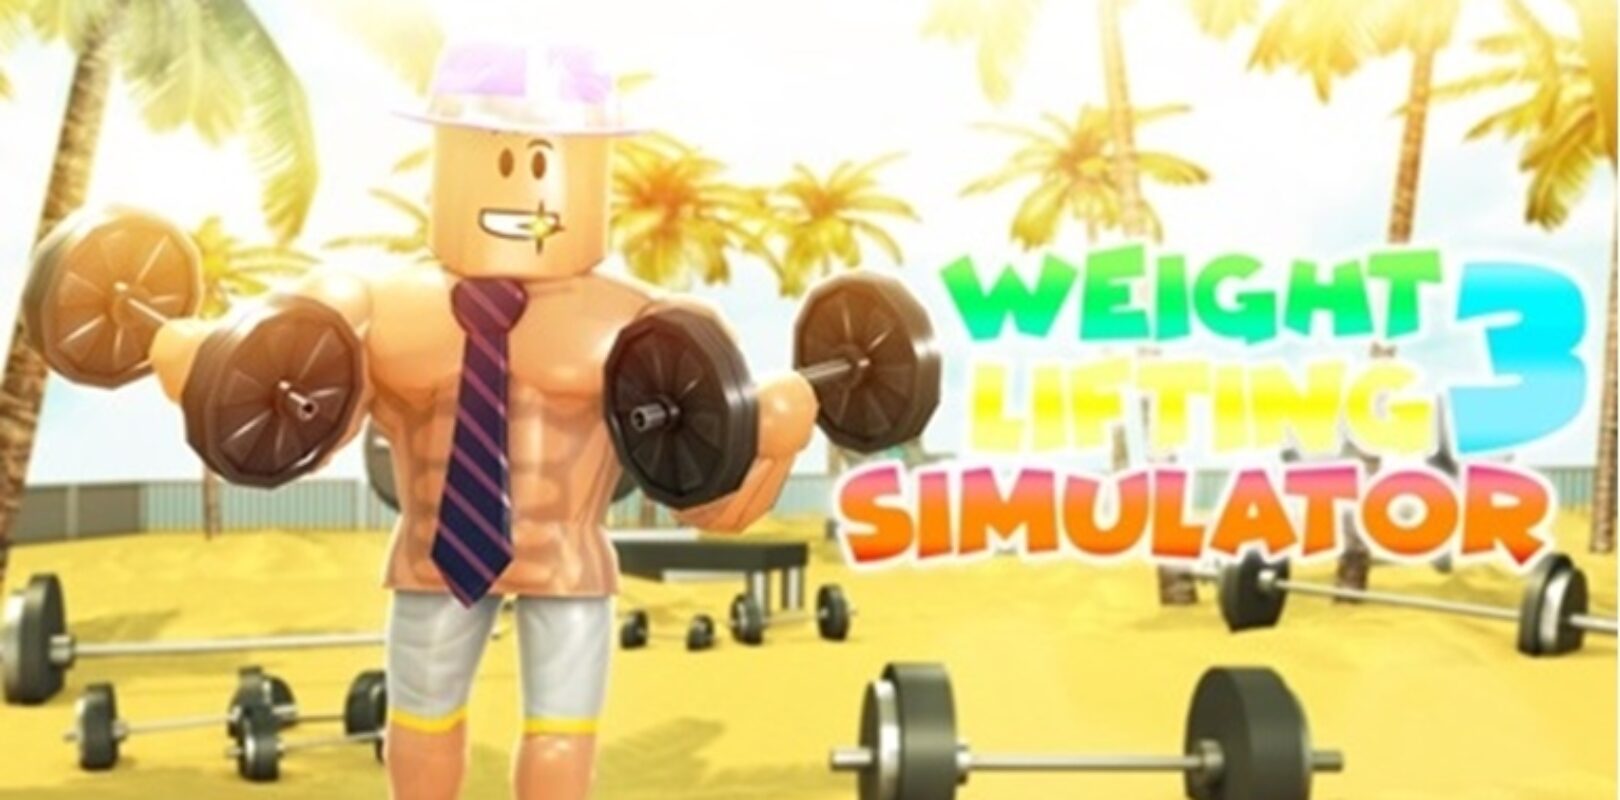 Weight Lifting Simulator 3 Codes July 2021 Pivotal Gamers - roblox cheat codes weight lifting simulator 3